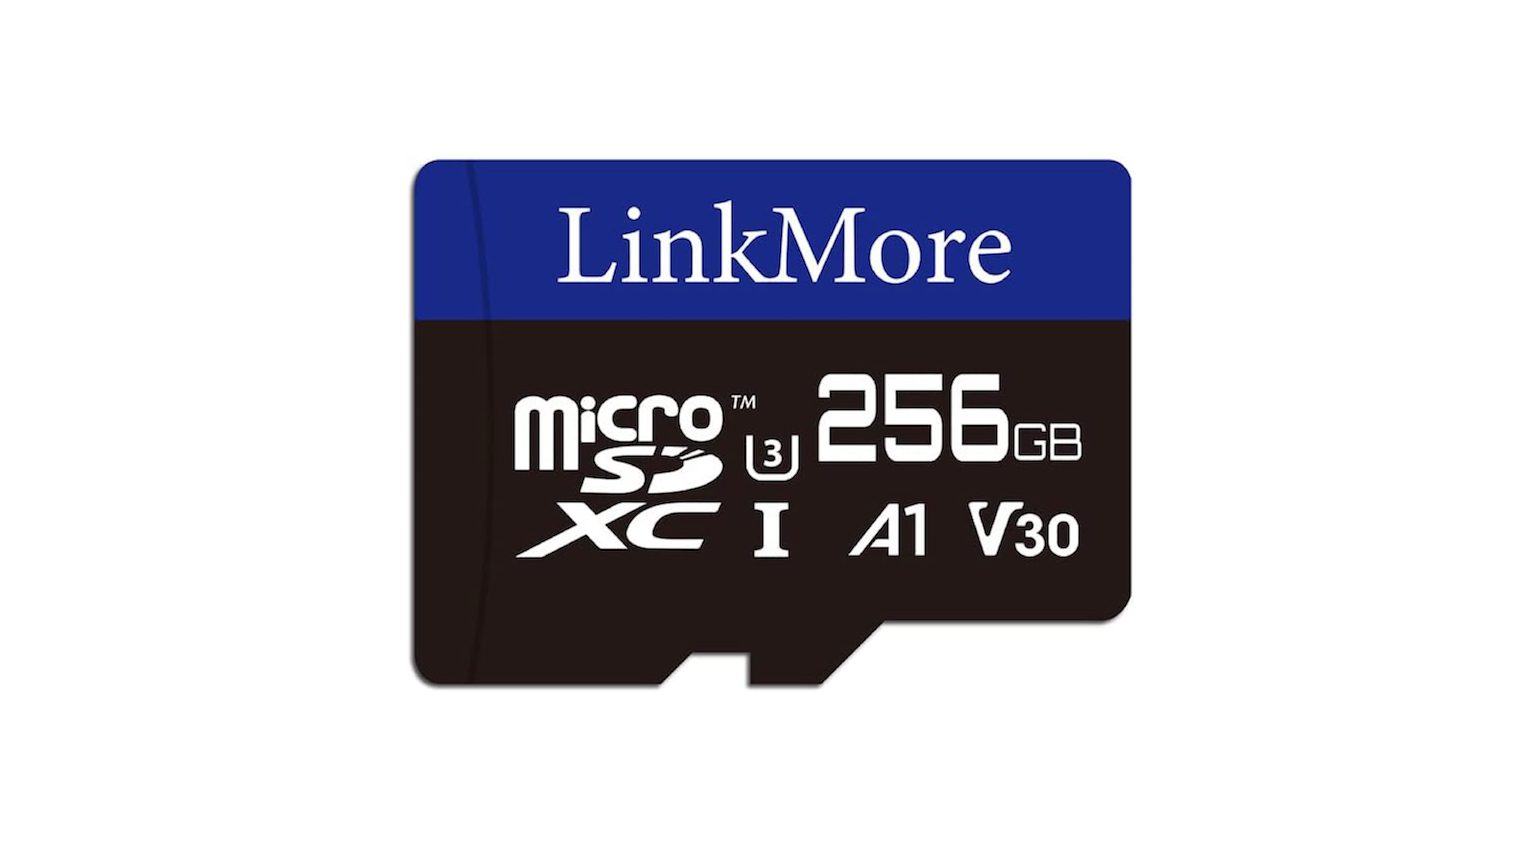 LinkMore 256 GB Micro SDXC Card